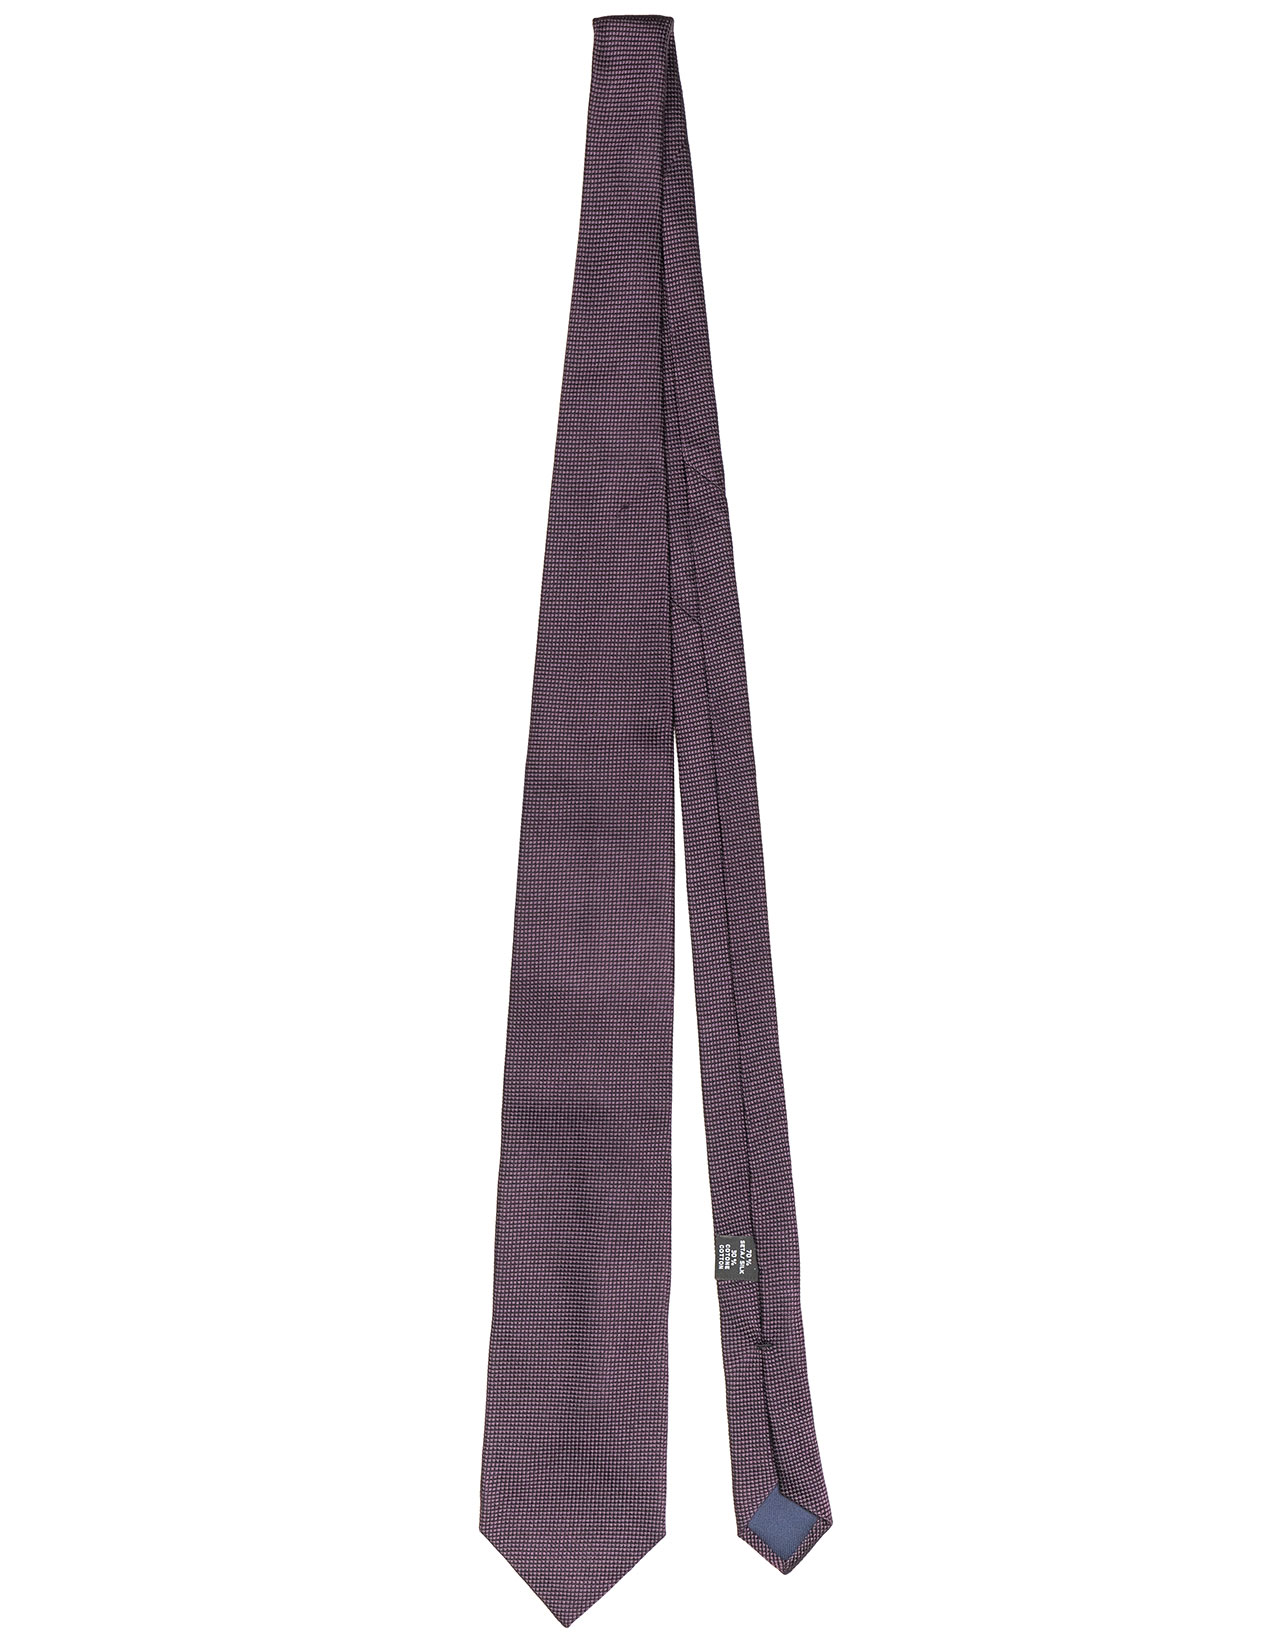 Cesare Attolini Krawatte in purpurviolett mit Struktur